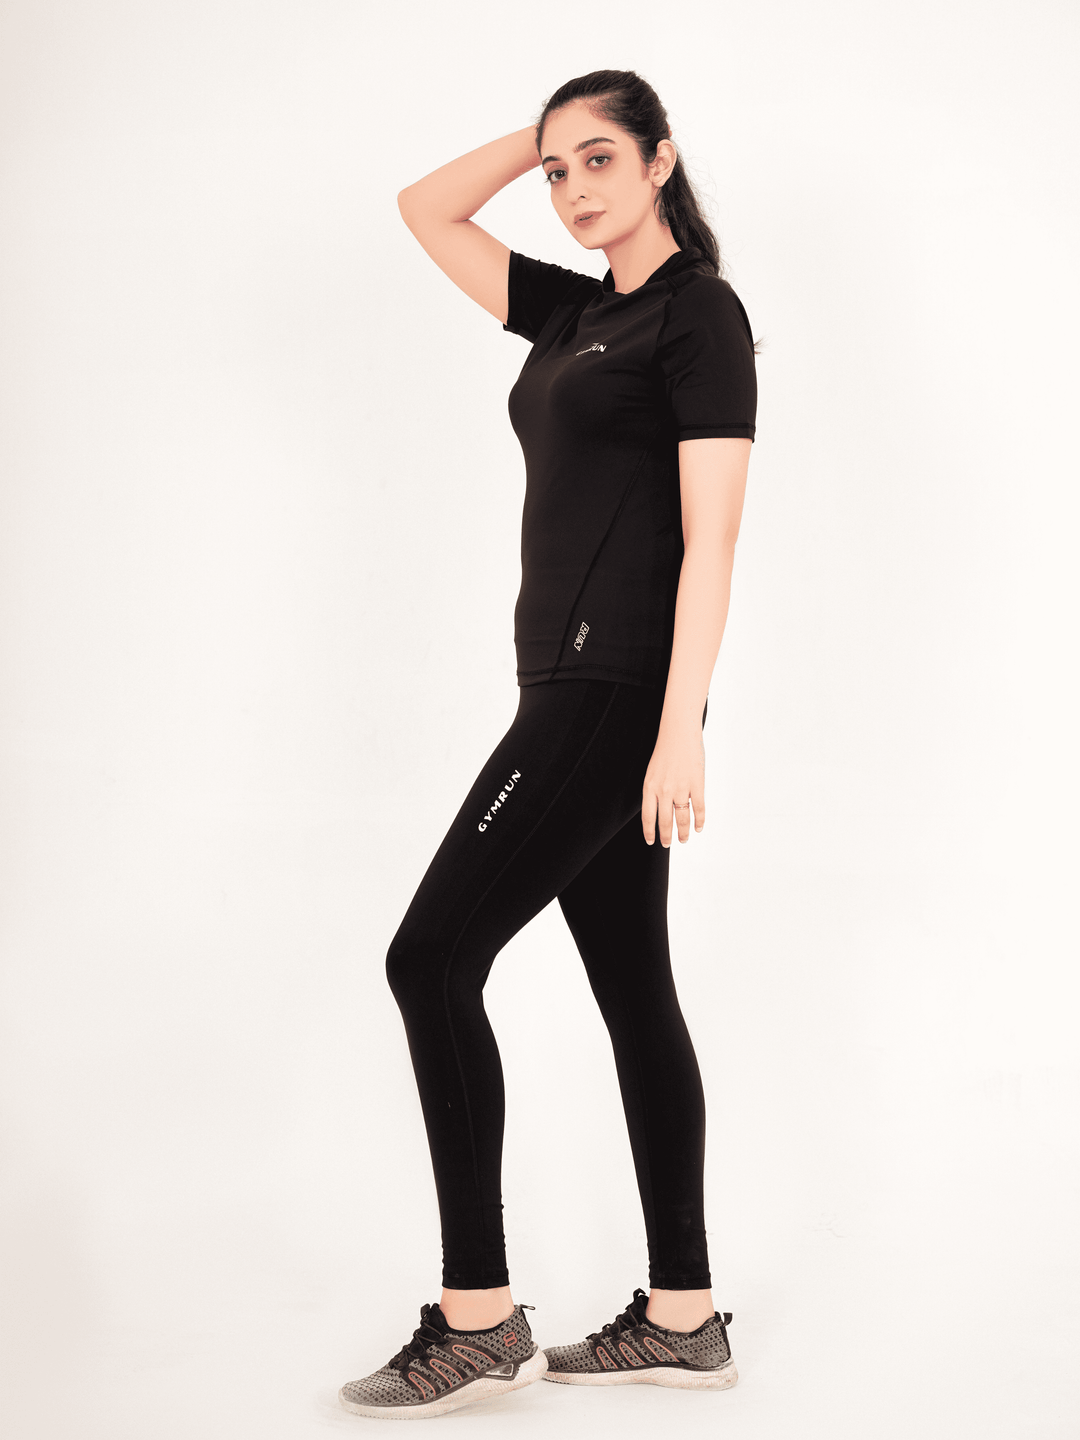 Seamless Dry-Fit Shirt - Black - GYMRUN Activewear